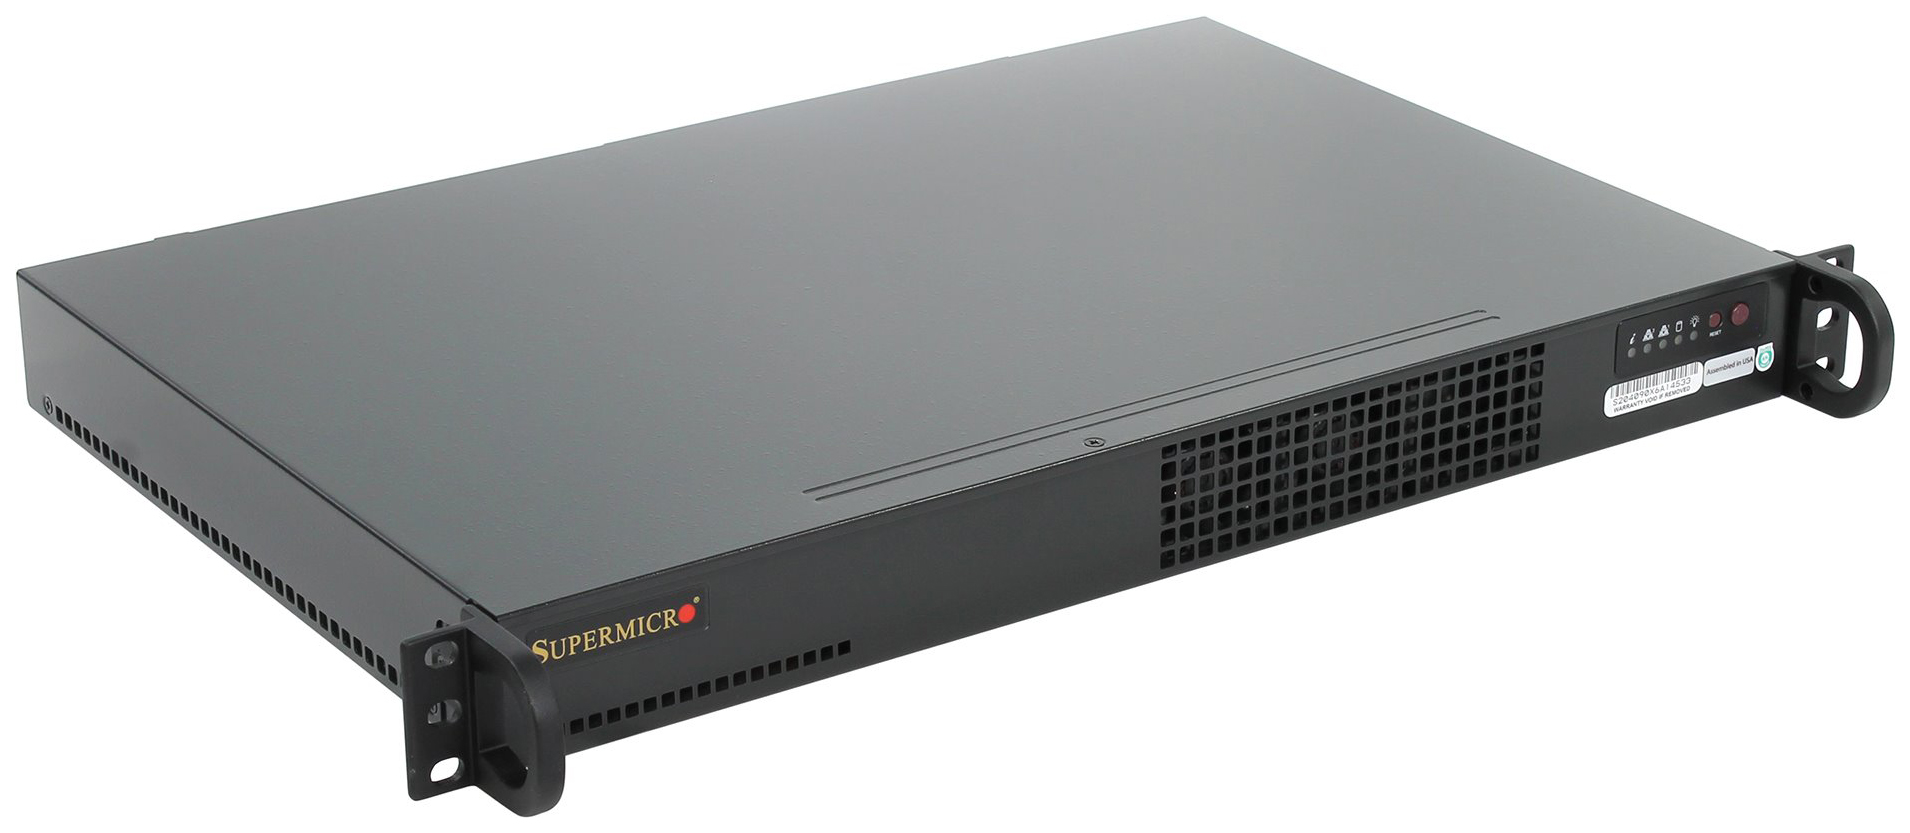 Серверная платформа Supermicro SYS-5019S-L